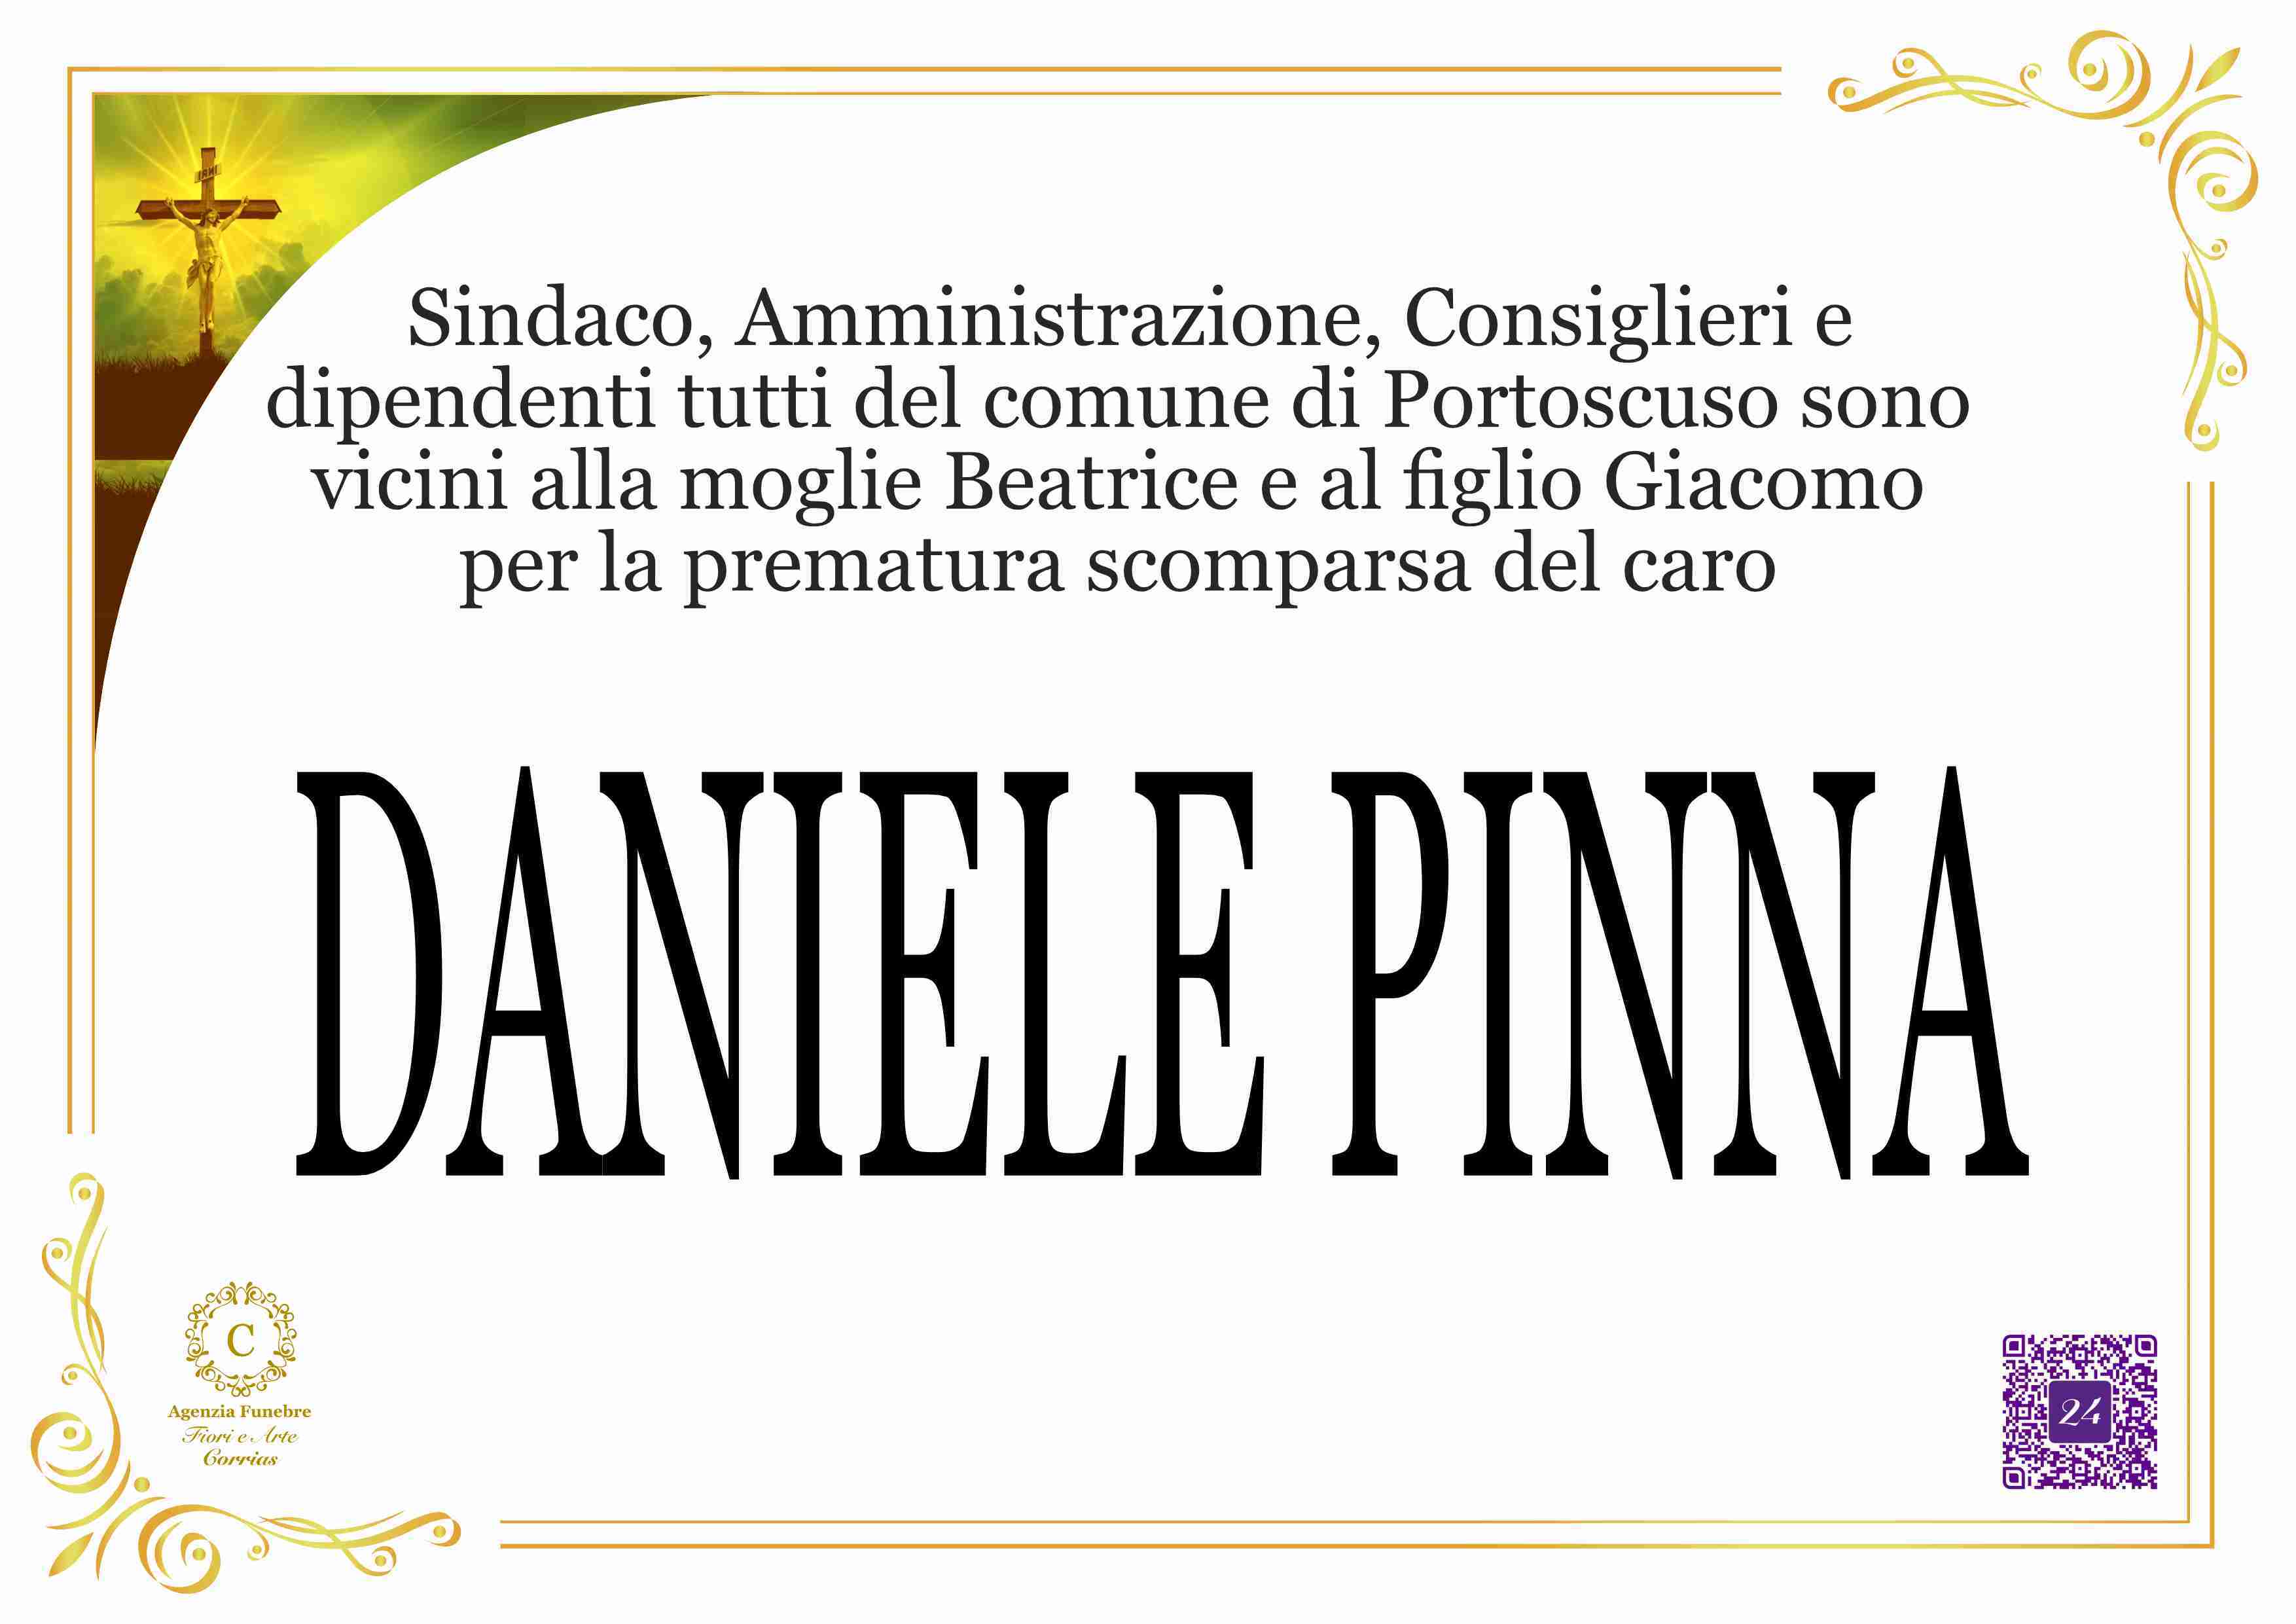 Daniele Pinna